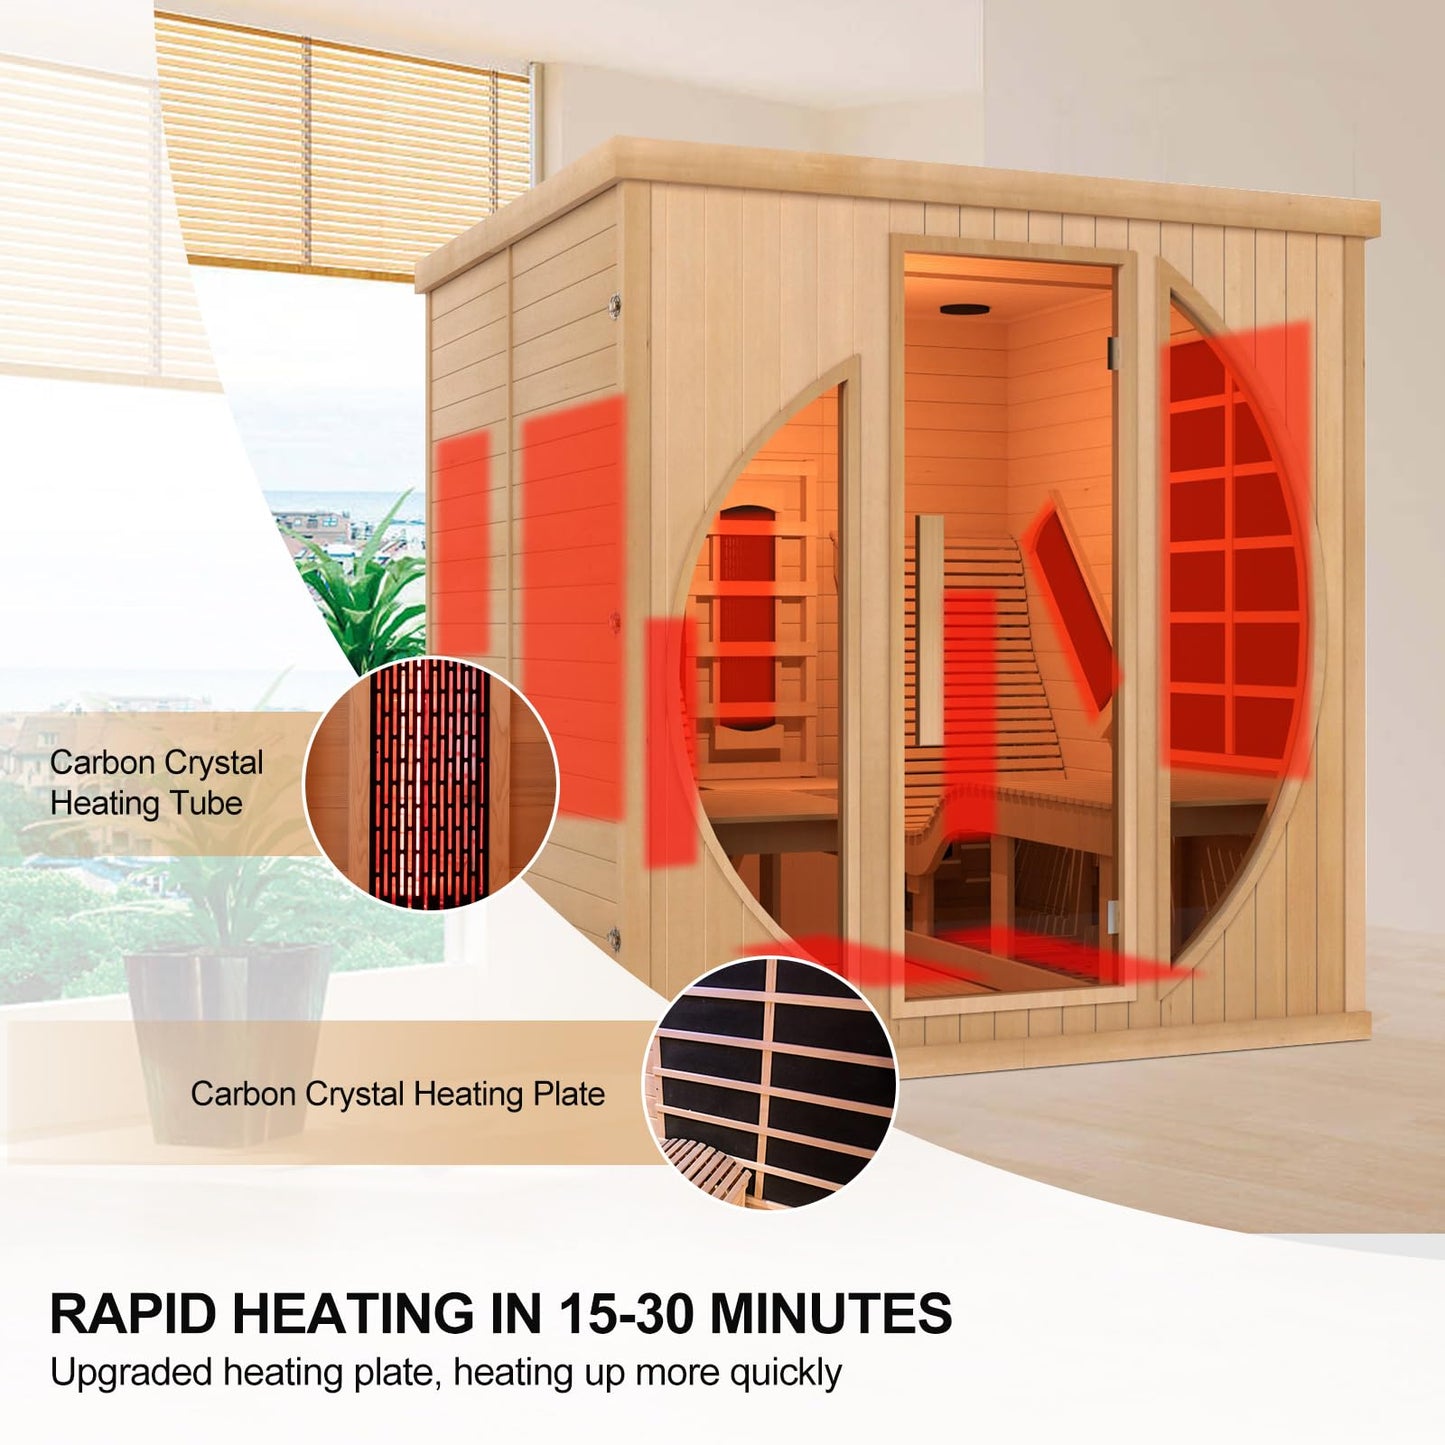 iDOTODO Far Infrared Wooden Sauna Room with Recliner, 2 Person Indoor Infrared Home Sauna, Indoor Saunas for Home 220V， 3400W, 9 Heaters, Hemlock,